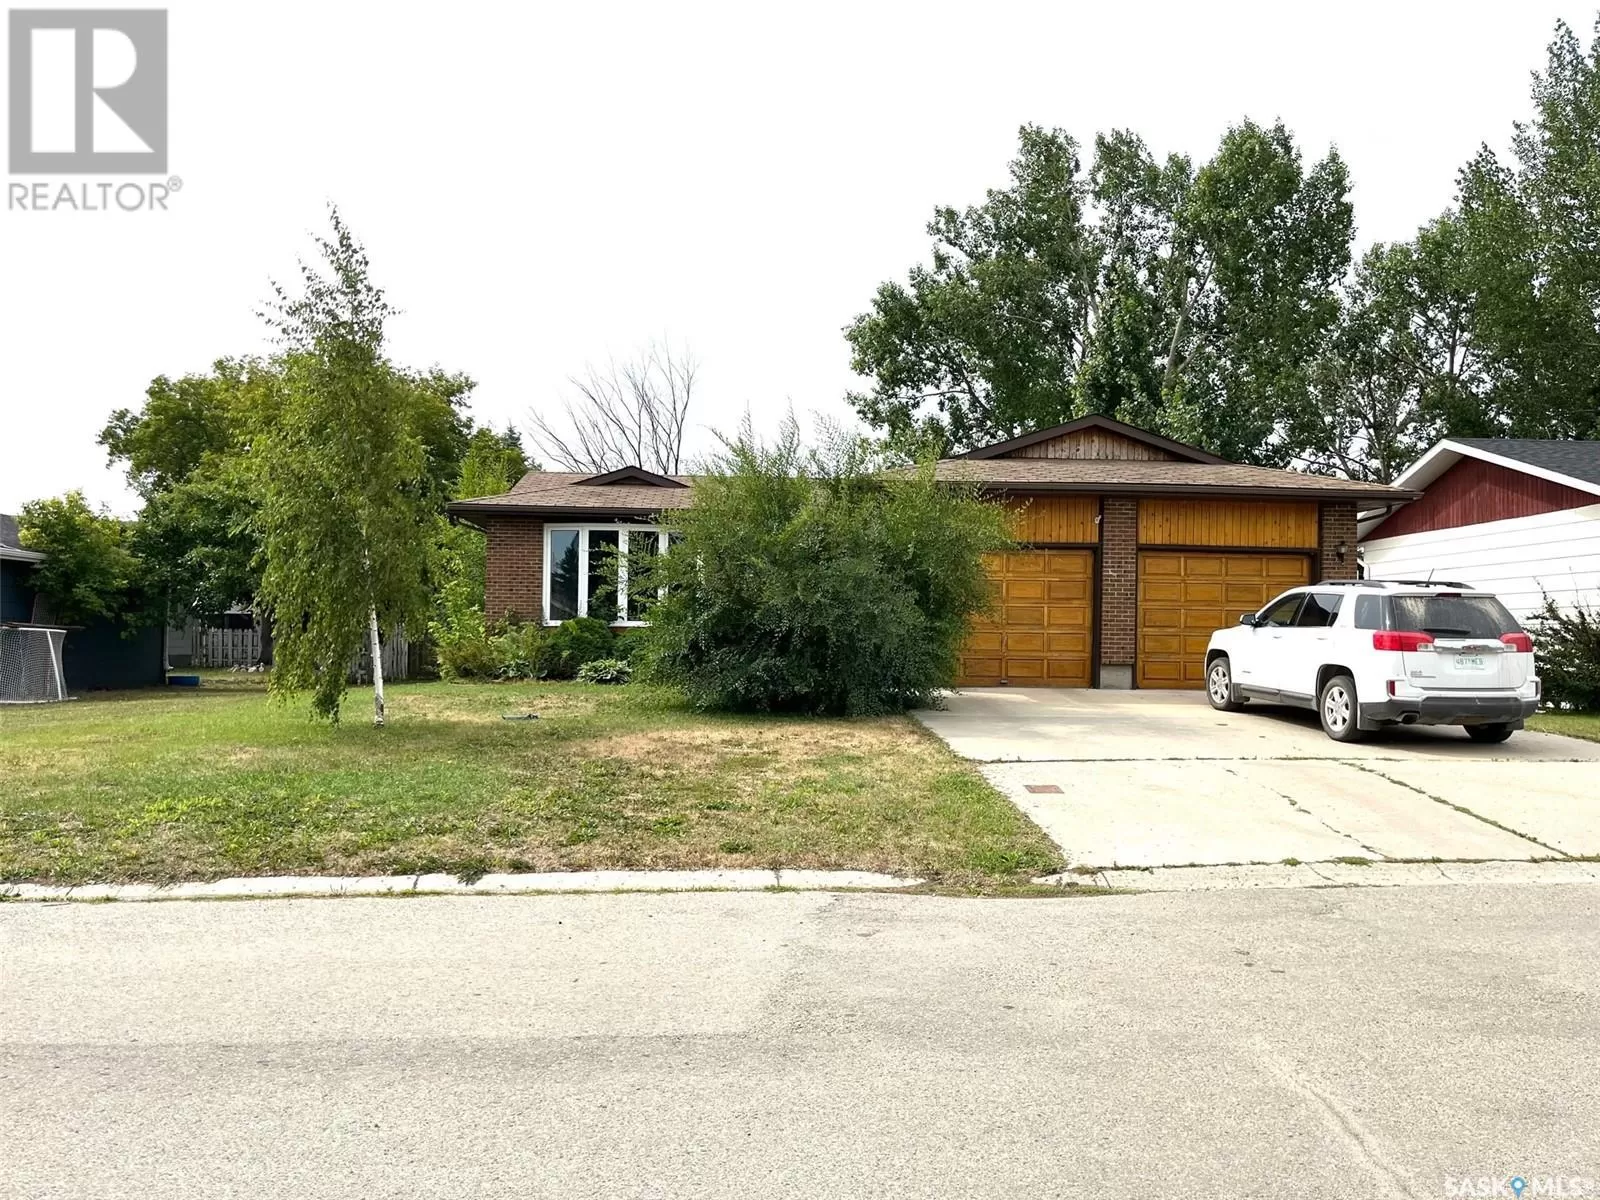 House for rent: 221 4th Avenue, Whitewood, Saskatchewan S0G 5C0